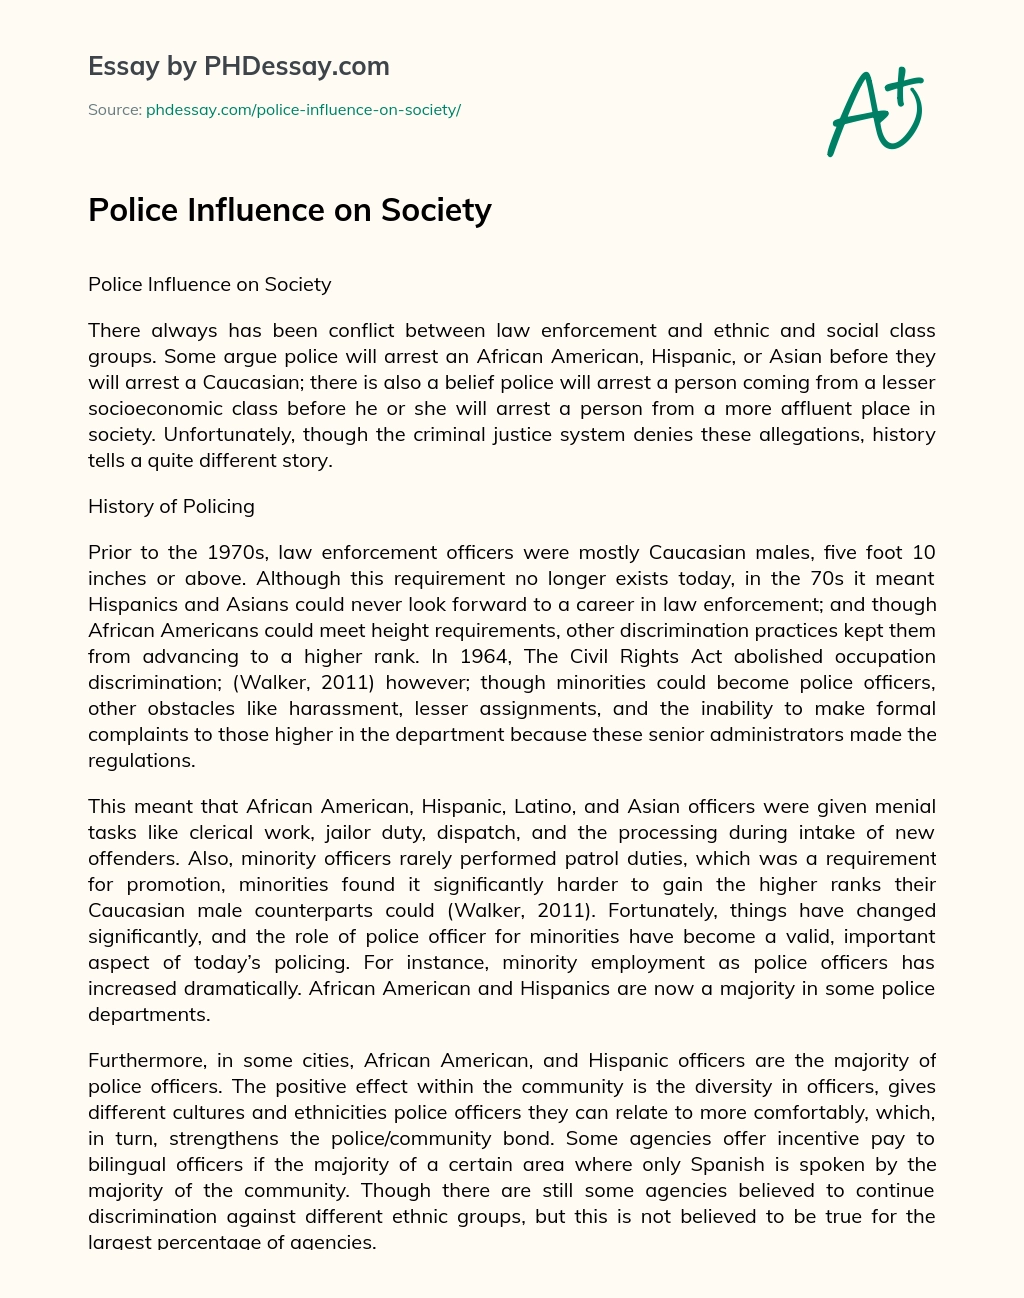 Police Influence on Society essay